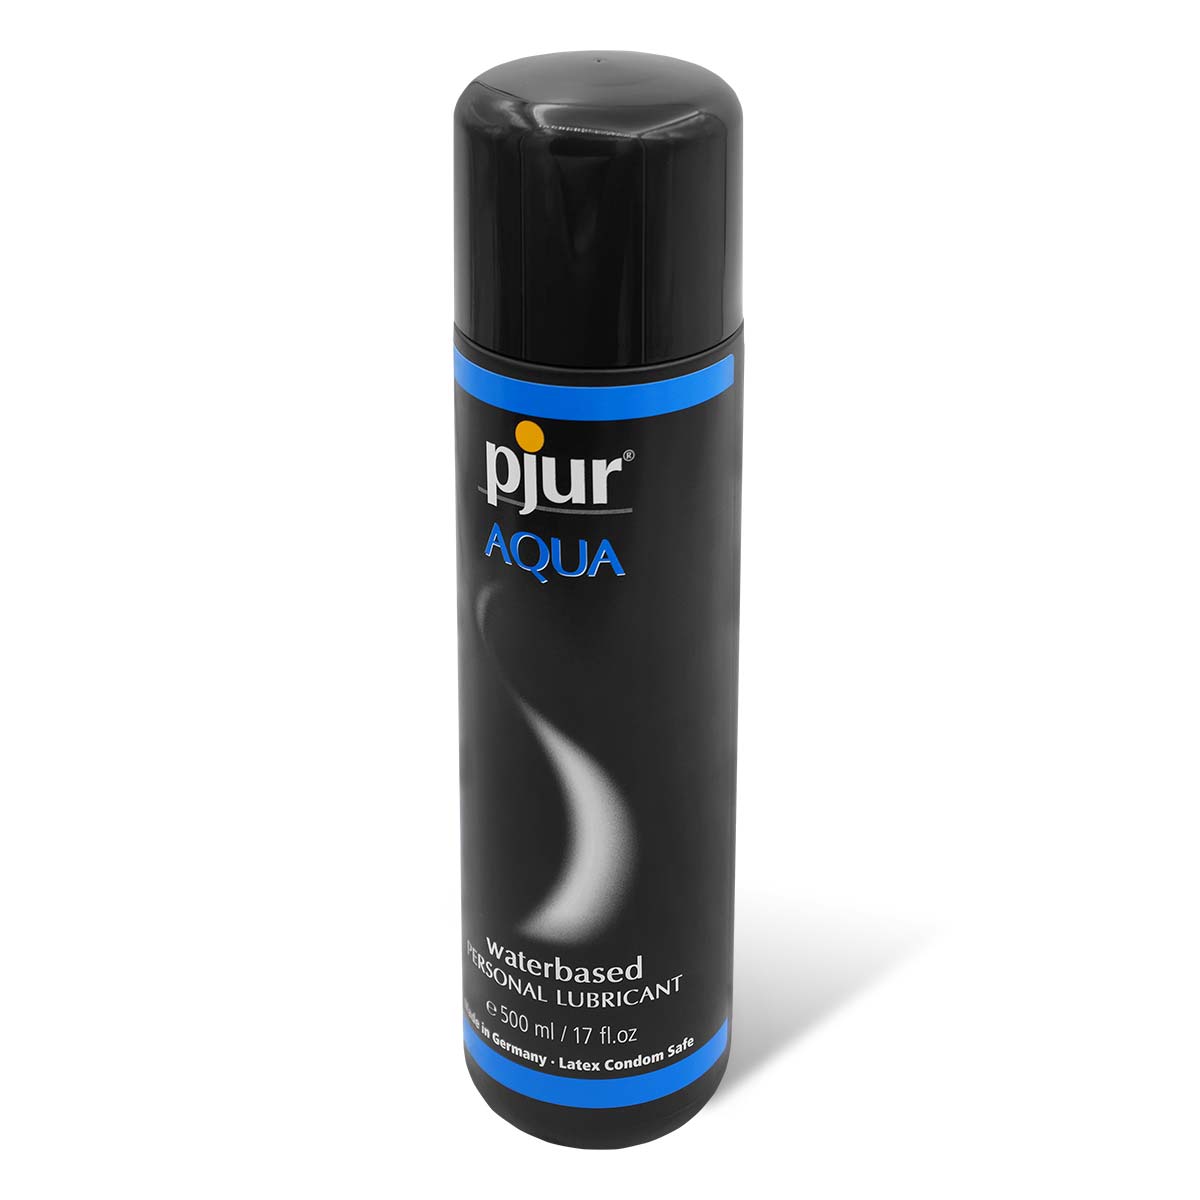 pjur AQUA 500ml Water-based Lubricant - International Edition-p_1